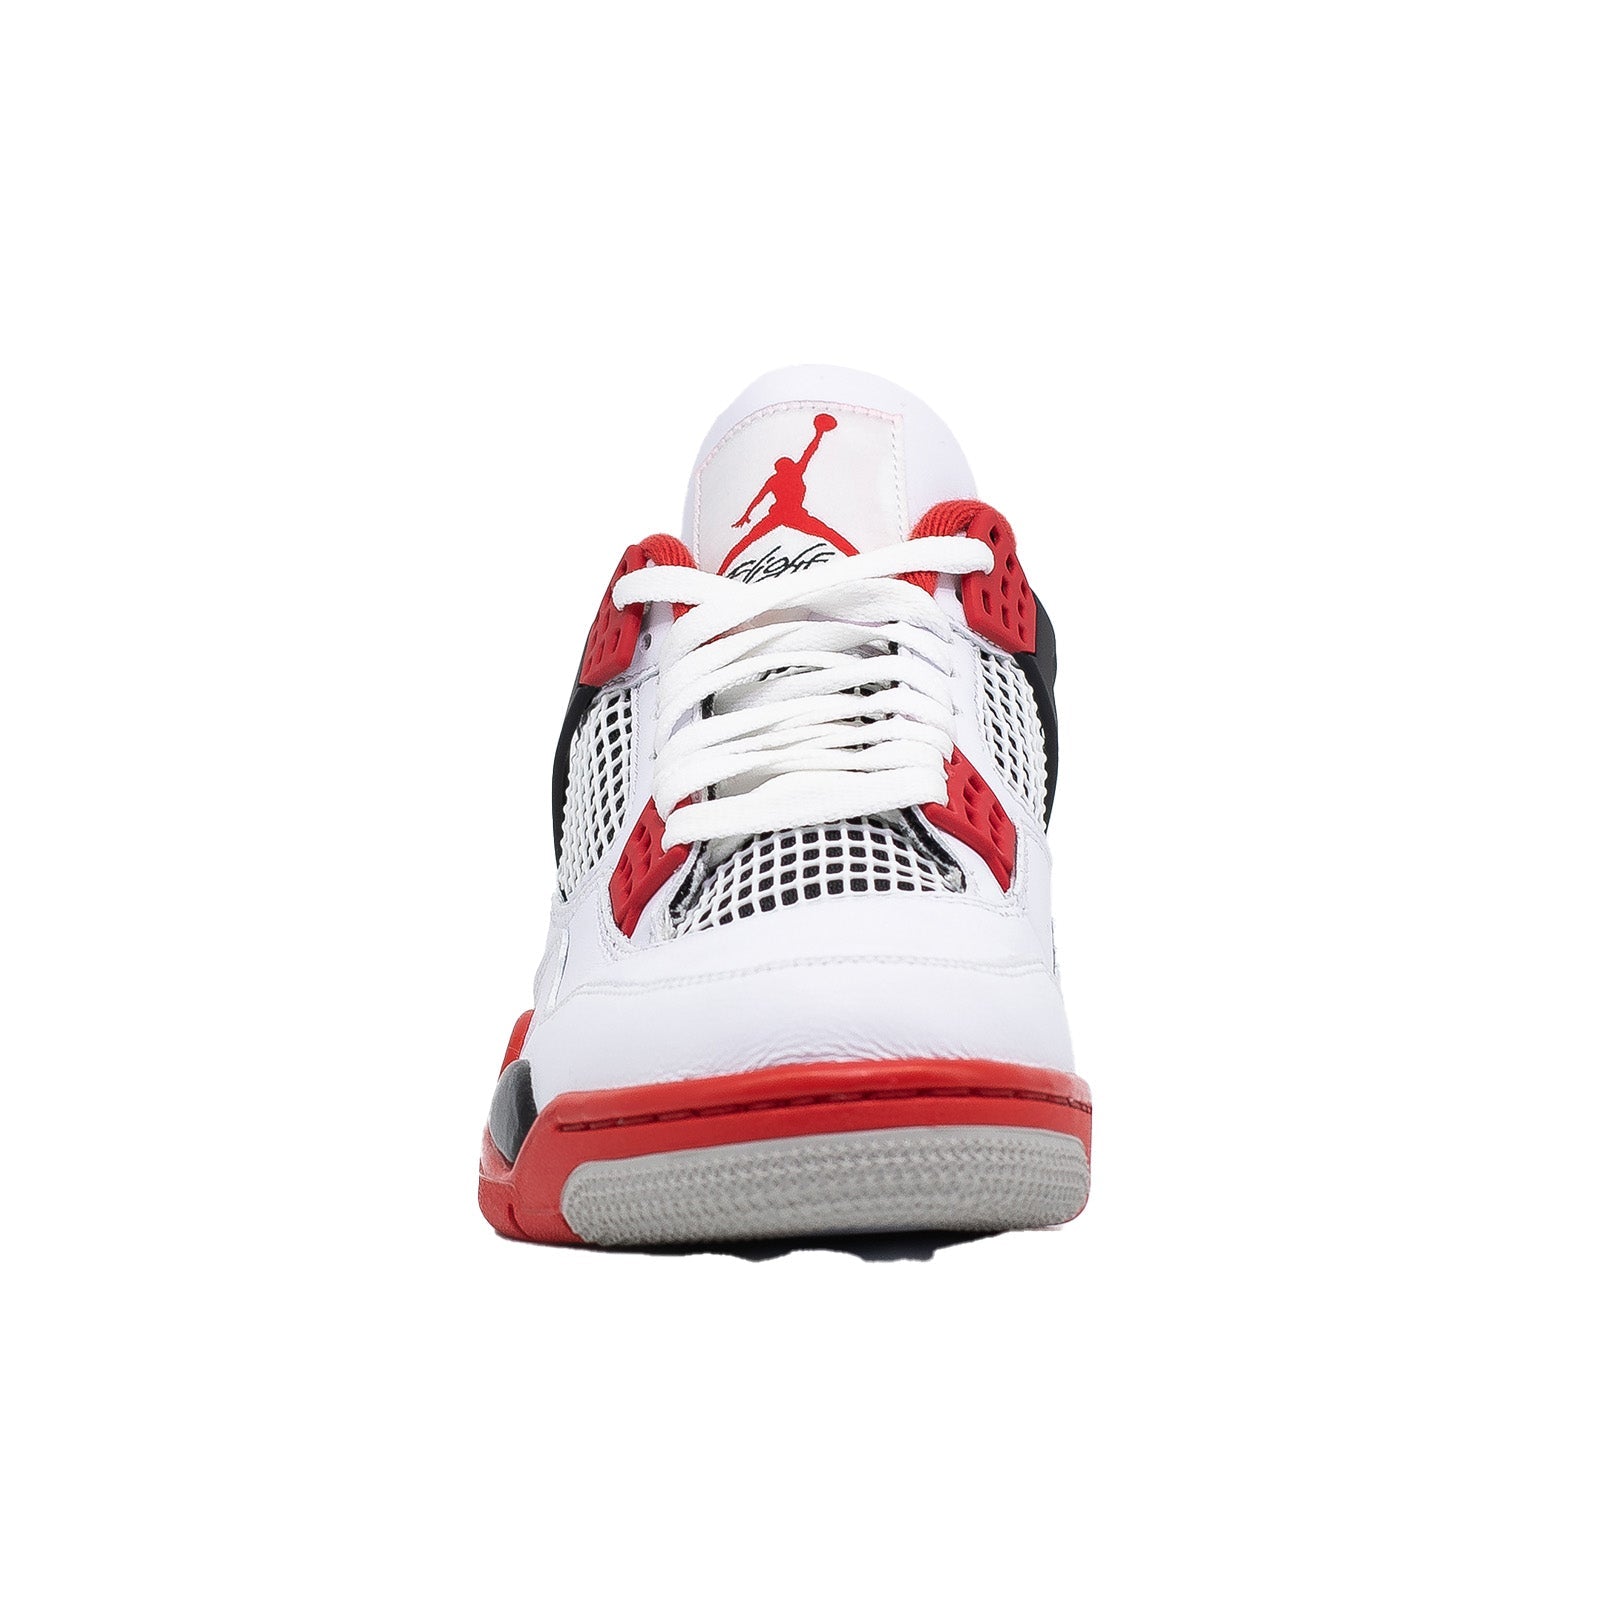 Air Jordan 4, Fire Red (2020)